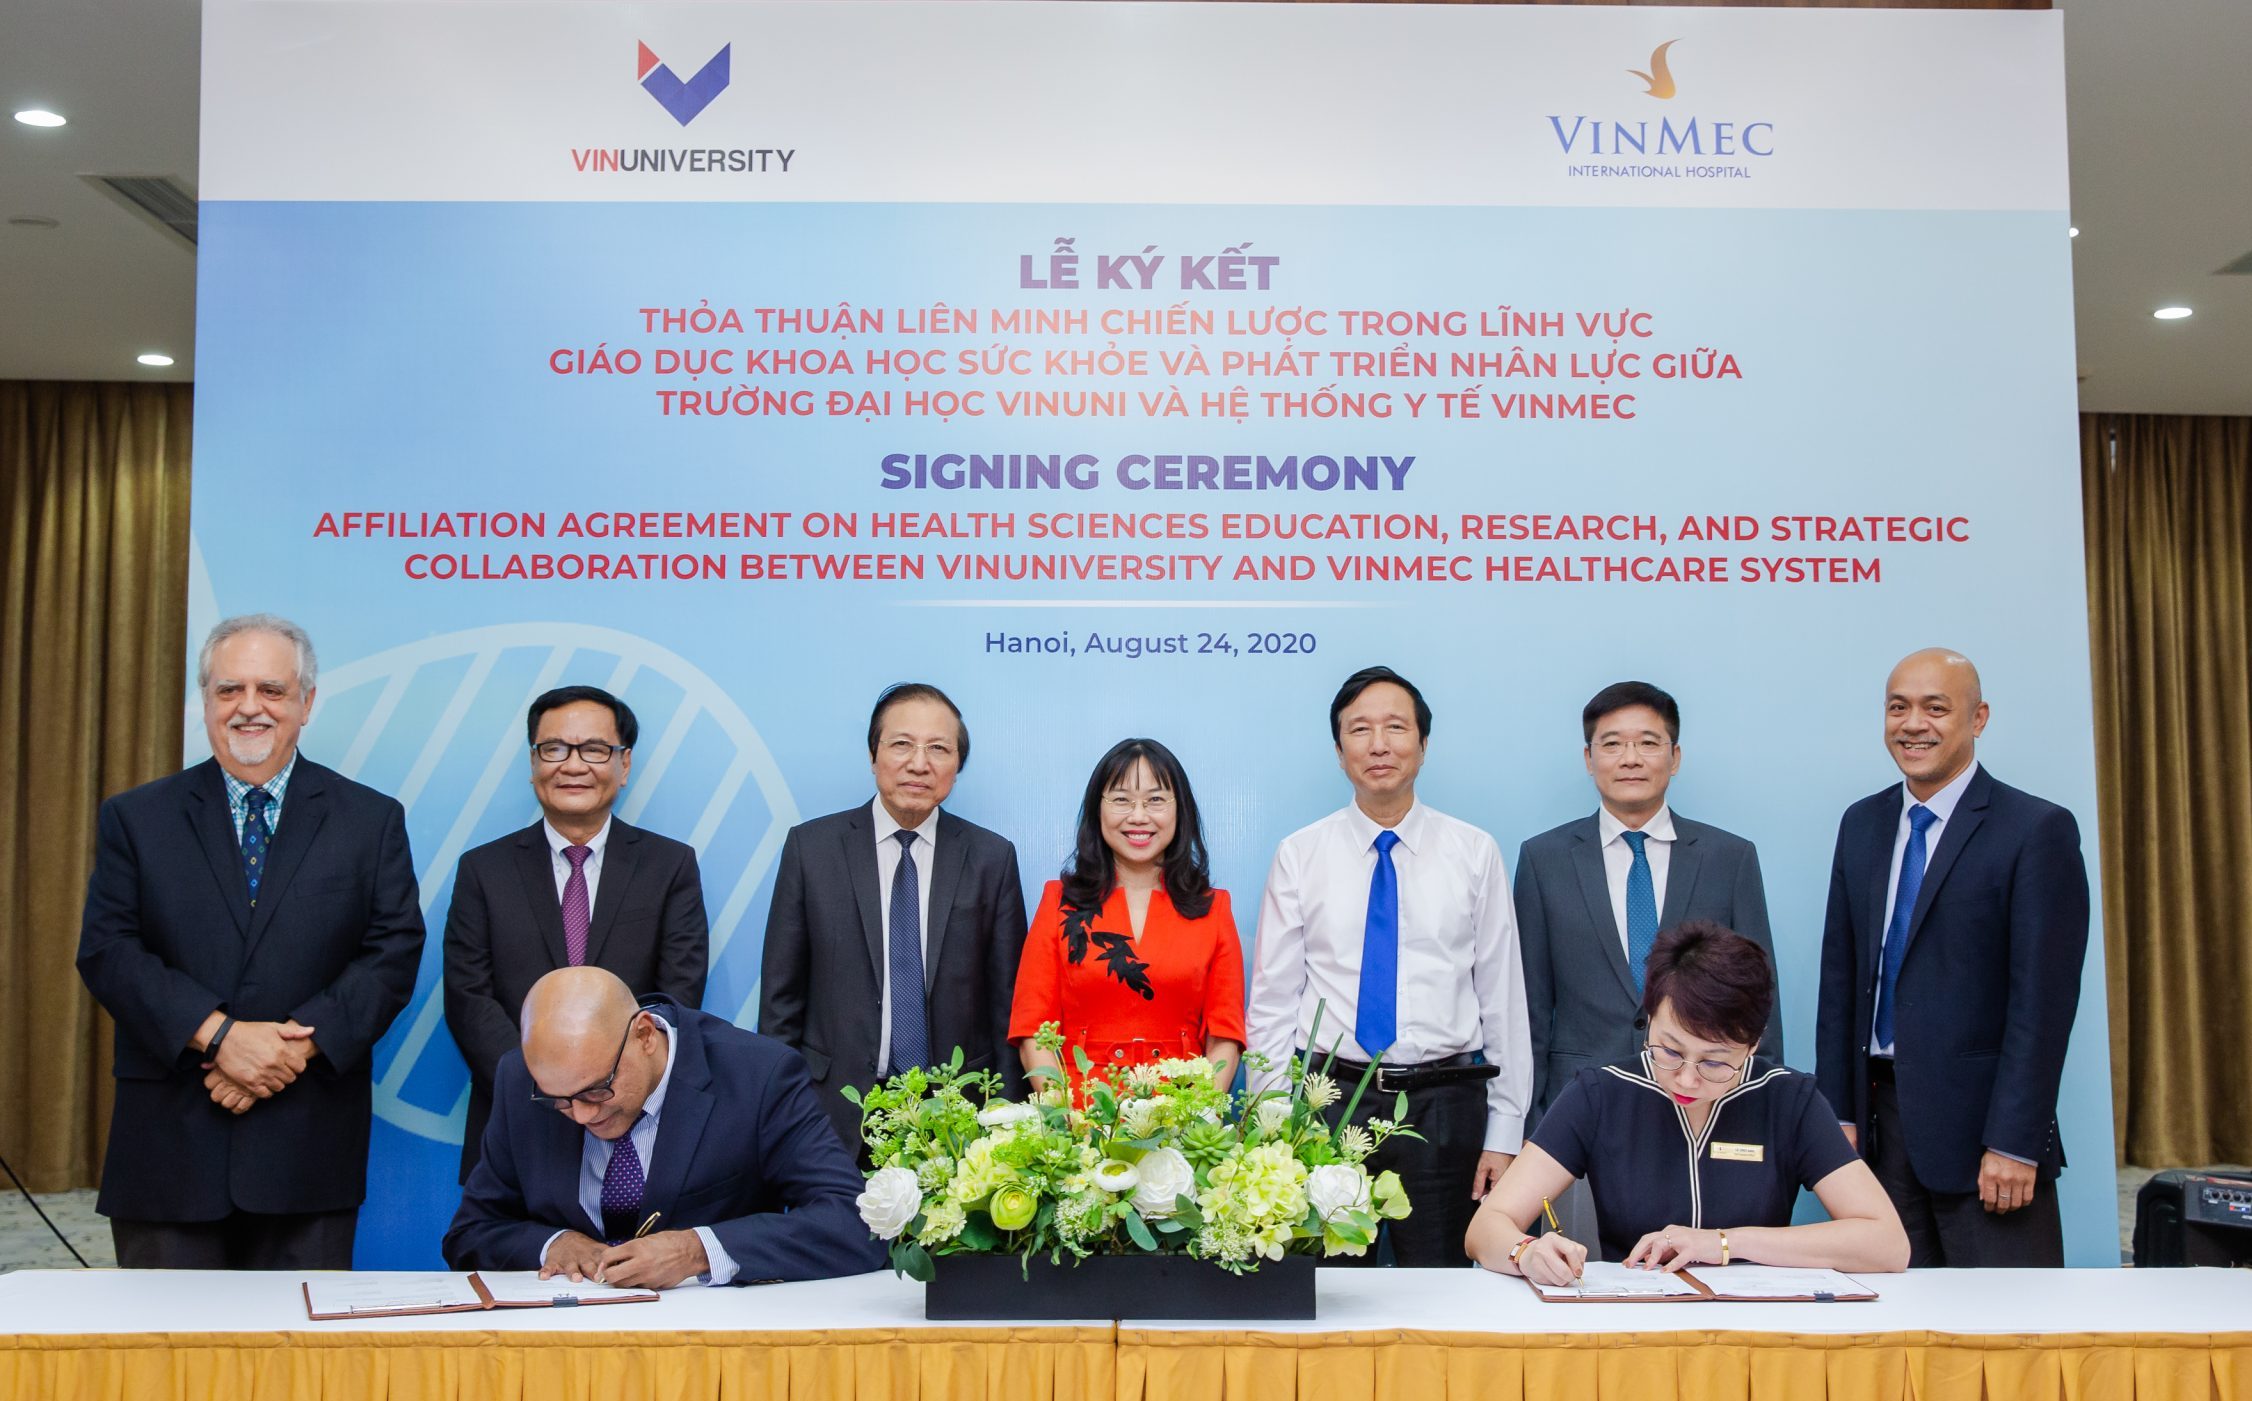 VinUniversity – Vinmec Signing Ceremony: A Milestone in Medical Education